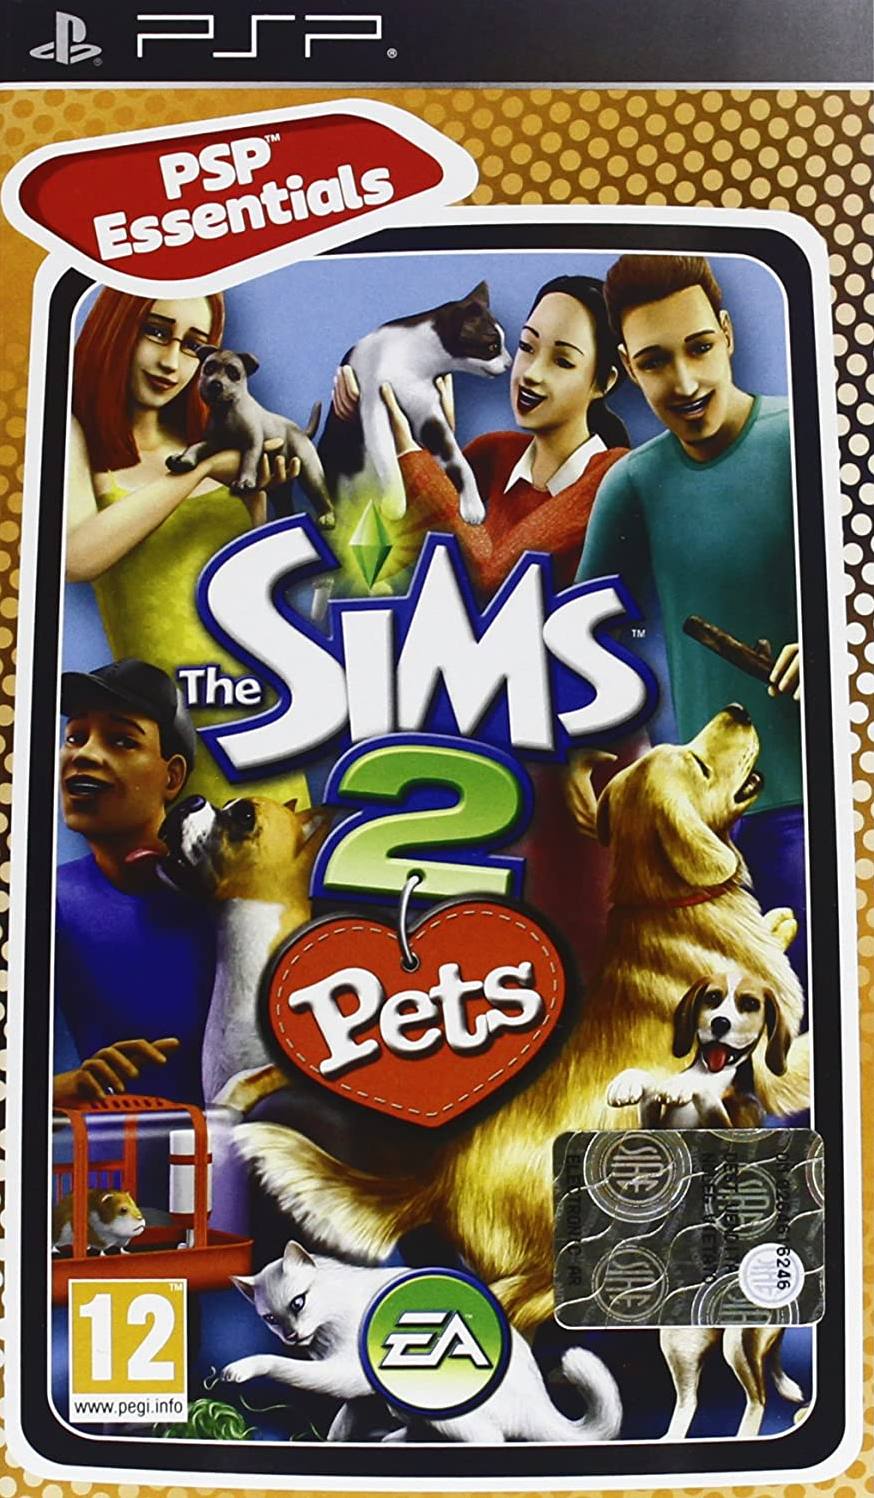 Симс на псп. The SIMS 2: Pets (для игровых приставок). The SIMS 2: питомцы. Симс на PSP. SIMS 2 Pets.